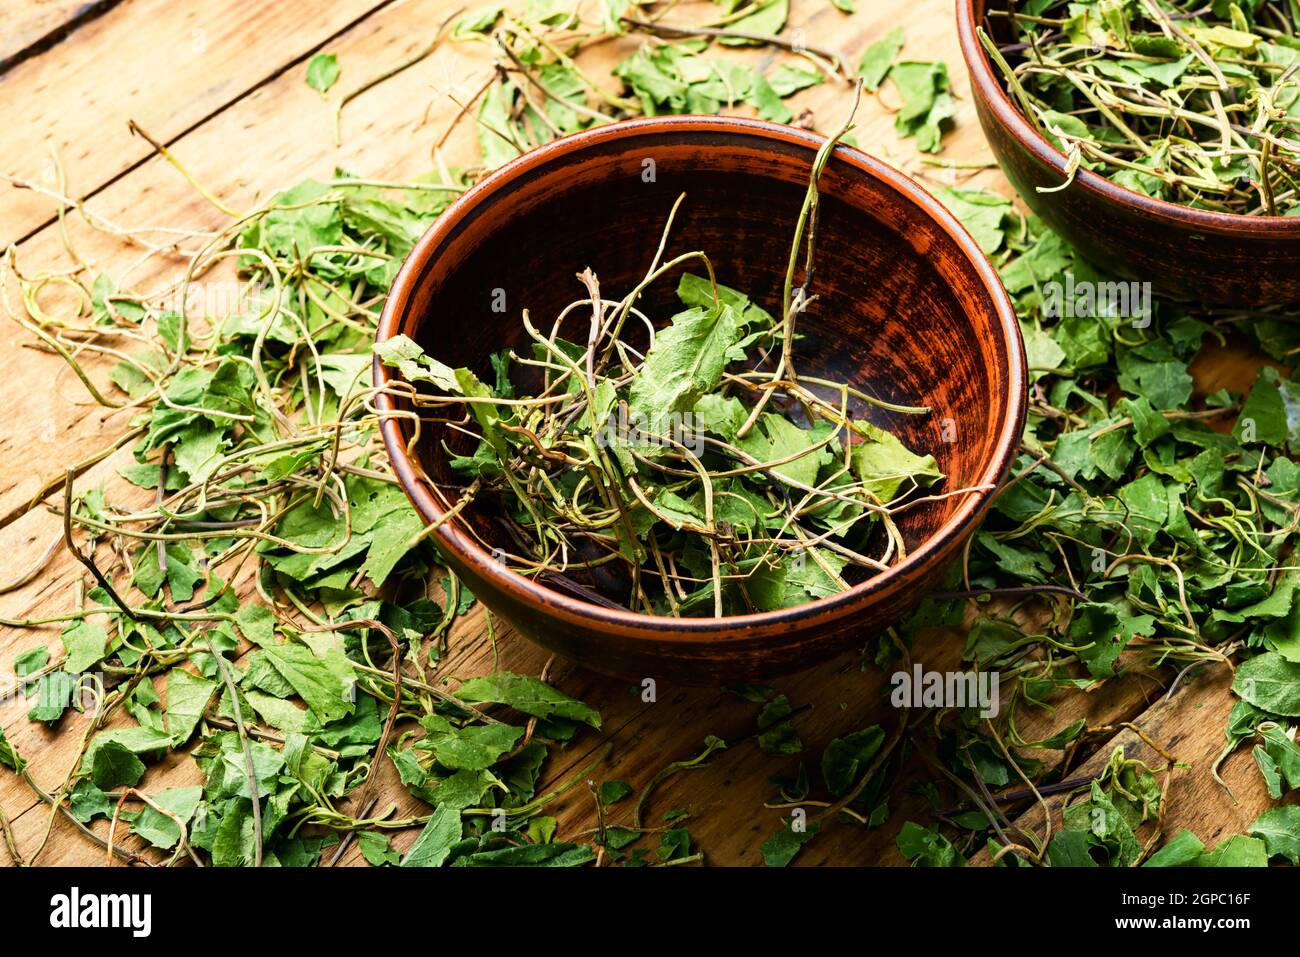 Orthilia secunda perennial medicinal plant popular in herbal medicine.Healing herbs Stock Photo